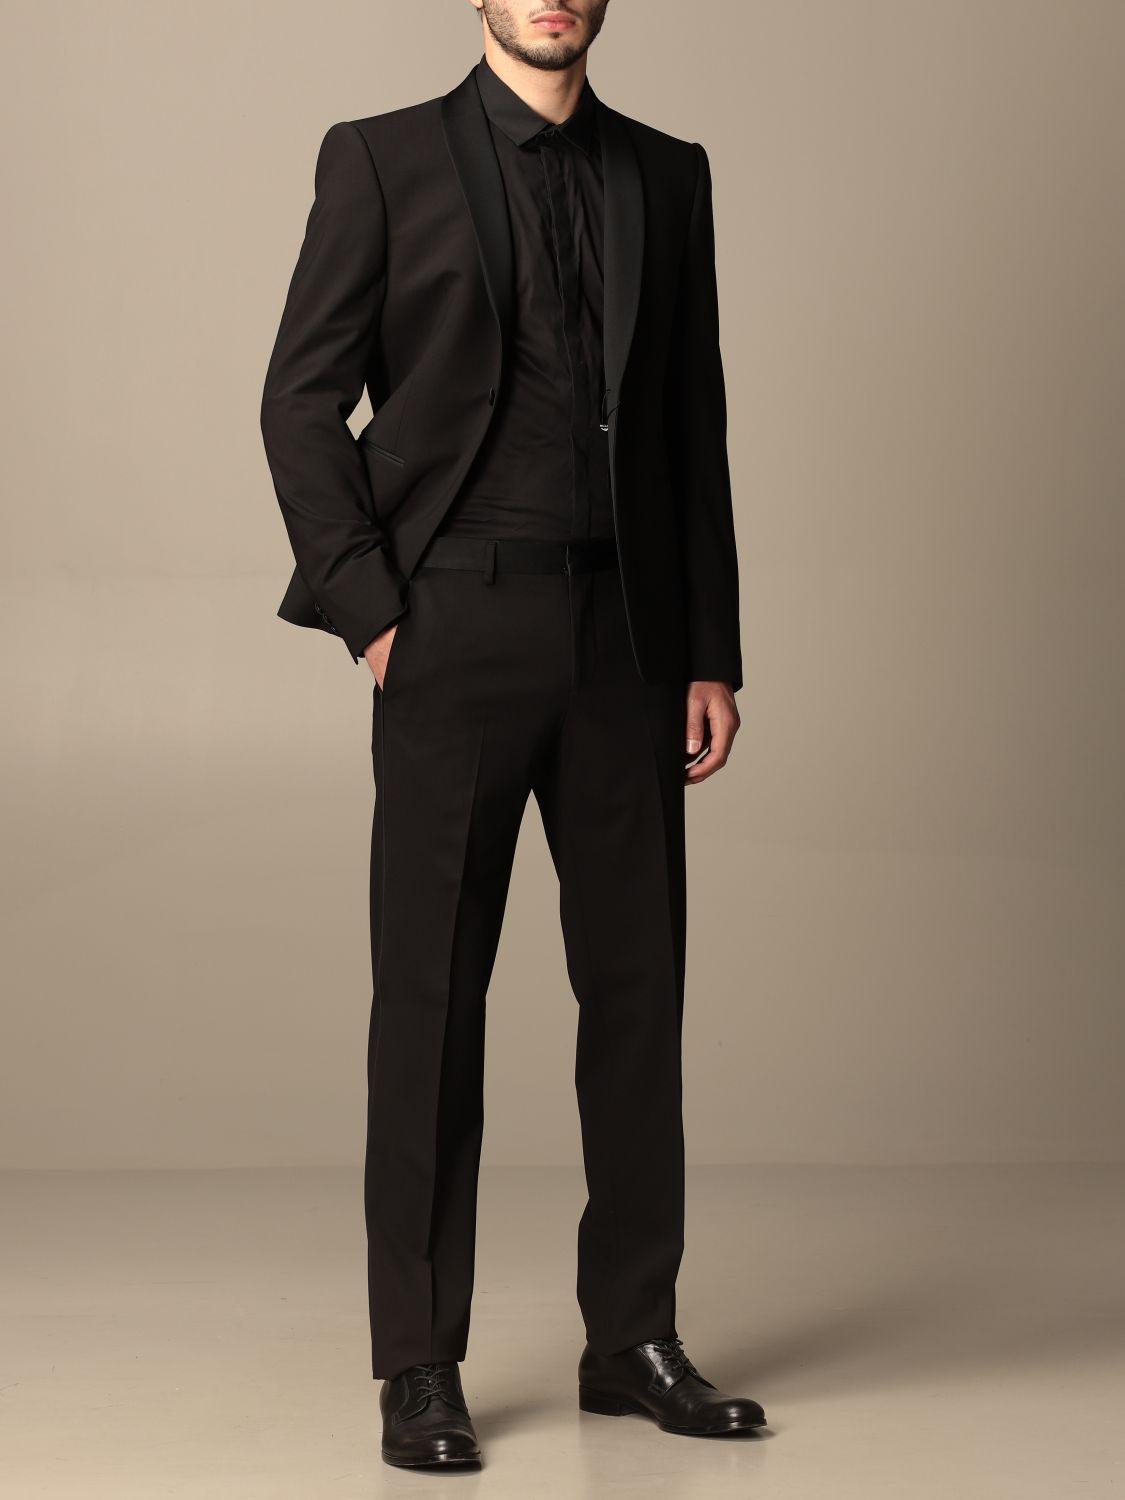 Introducir 65+ imagen all black armani suit - Abzlocal.mx